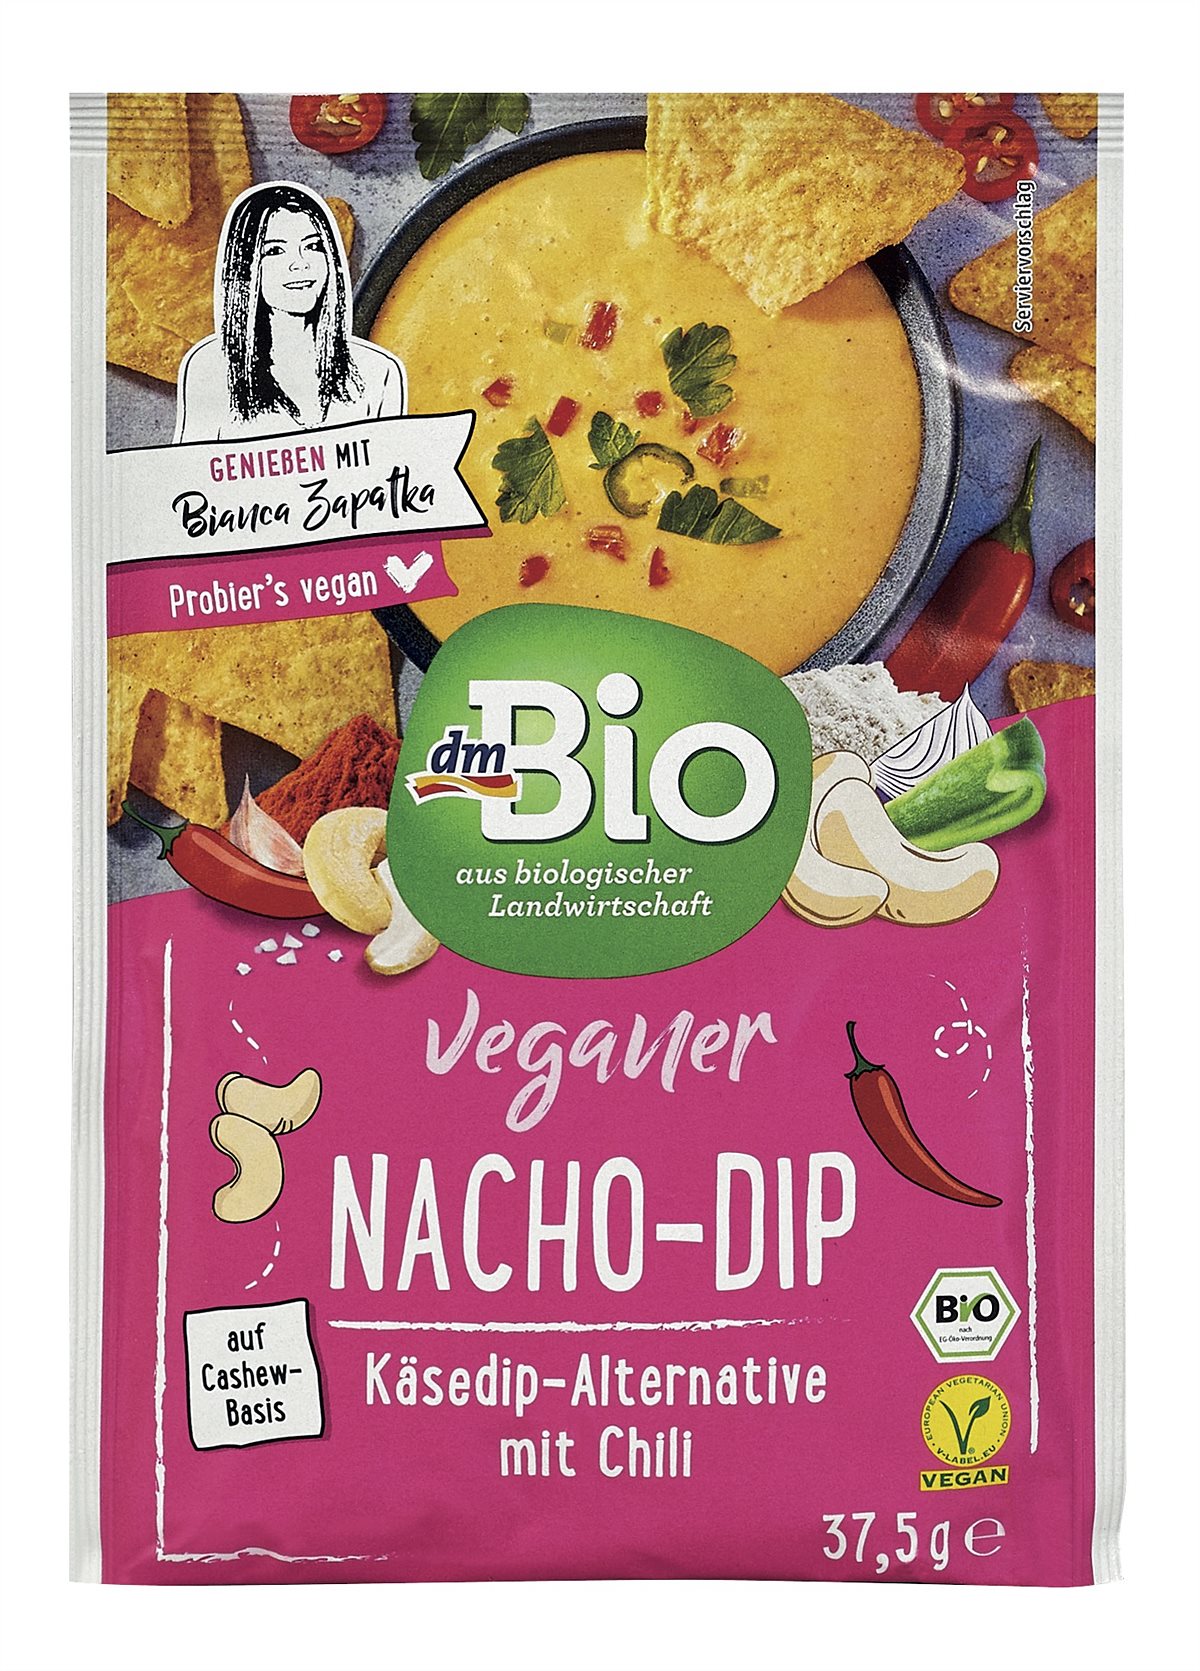 dmBio Veganer Nacho-Dip Käse-Alternative mit Chili 37,5g 1,95 Euro